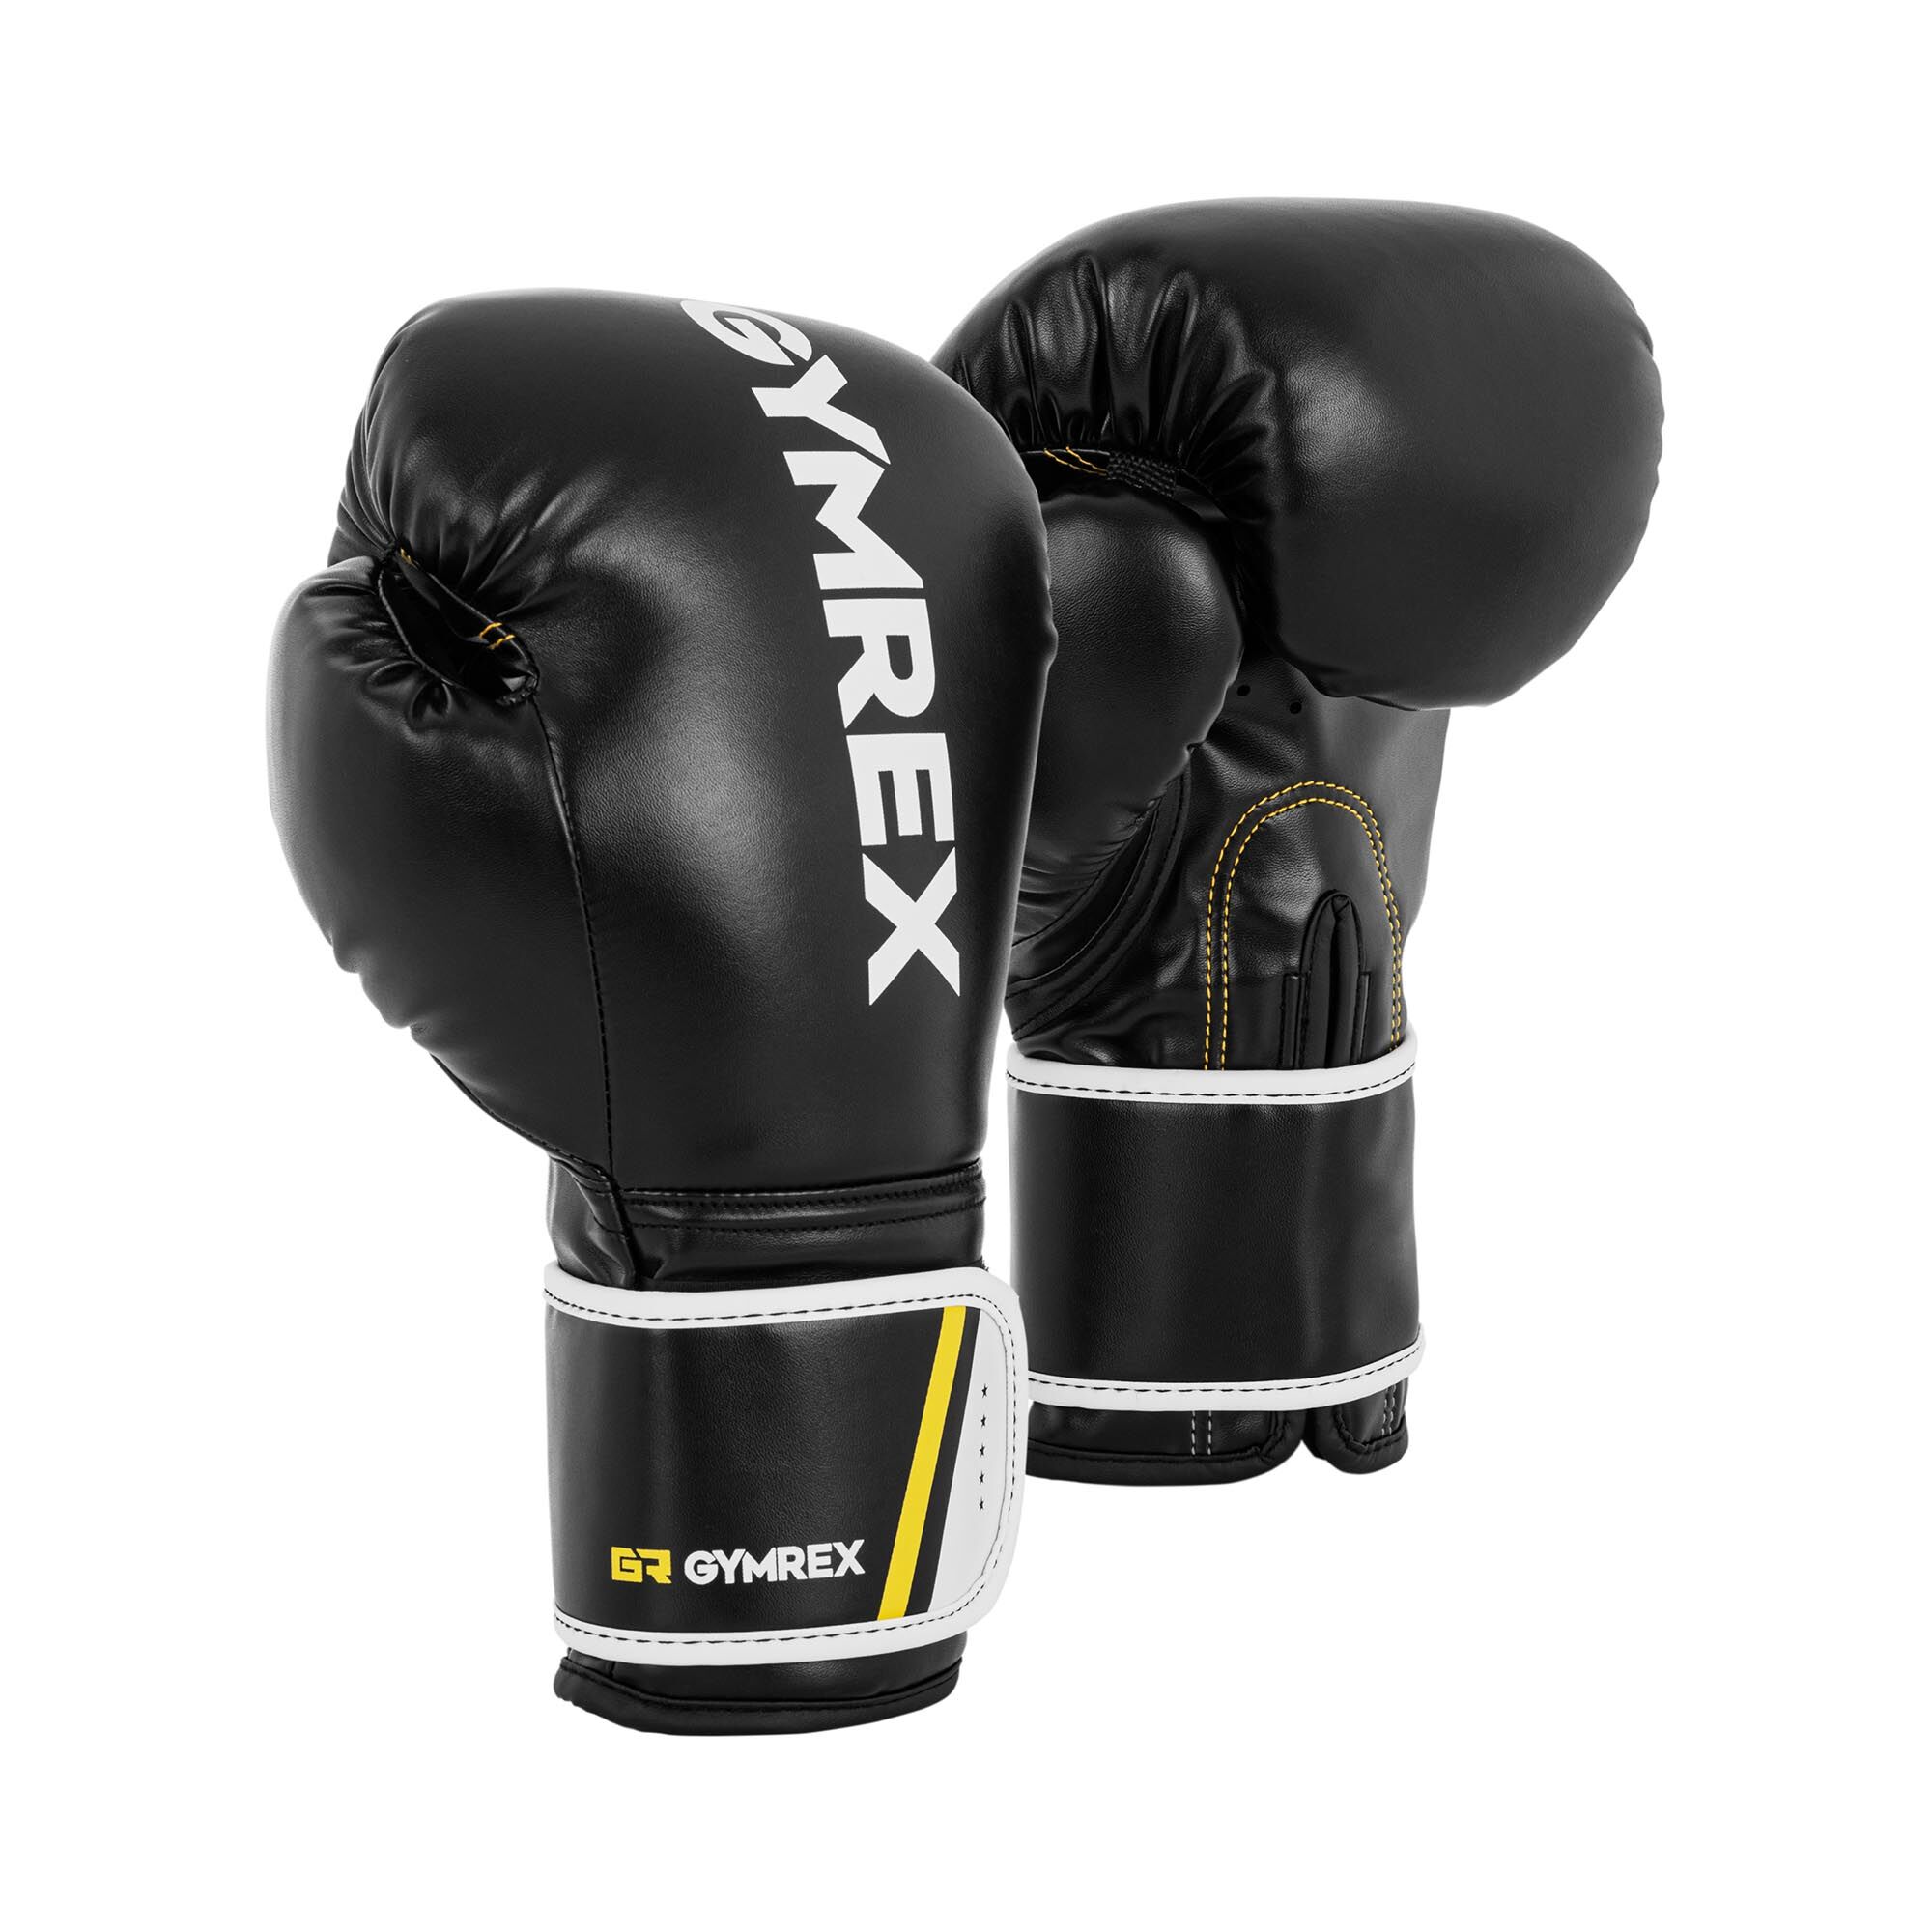 Gymrex Boxing Gloves - 14 oz - black GR-BG 14BB